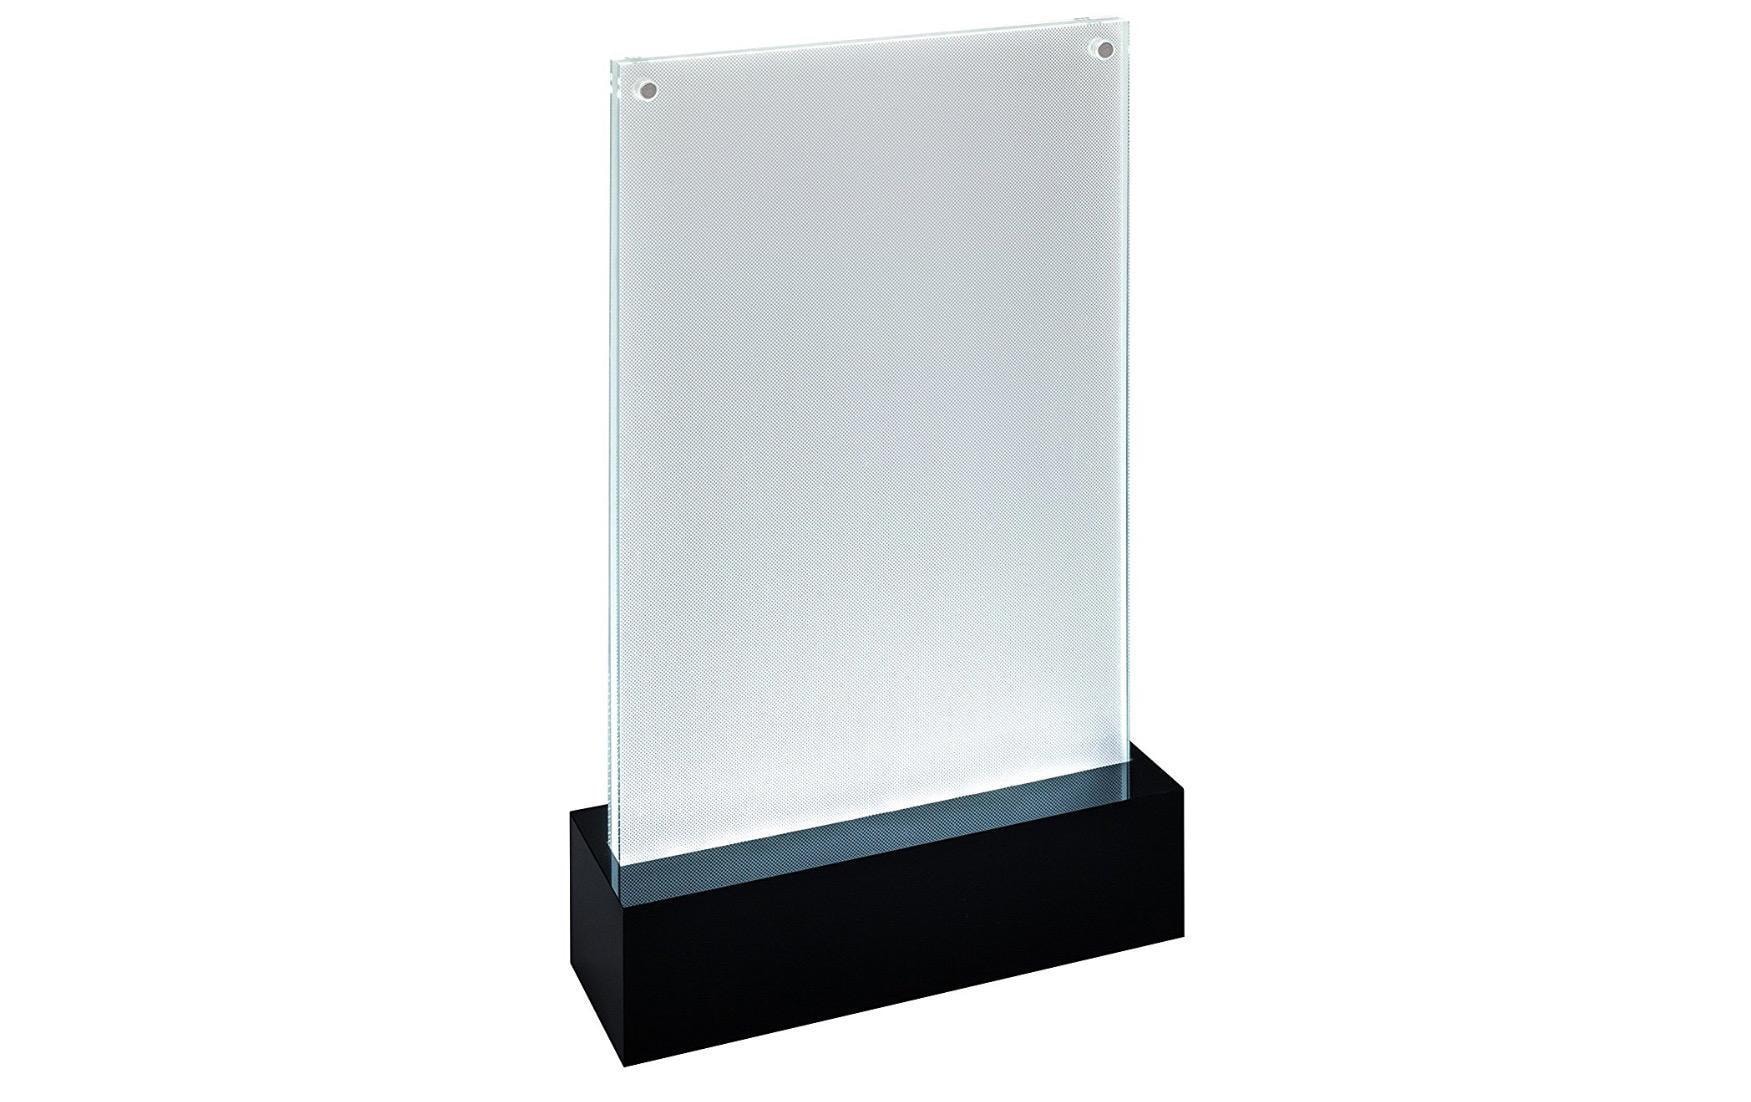 Sigel Tischaufsteller LED 11.6 x 25.5 cm